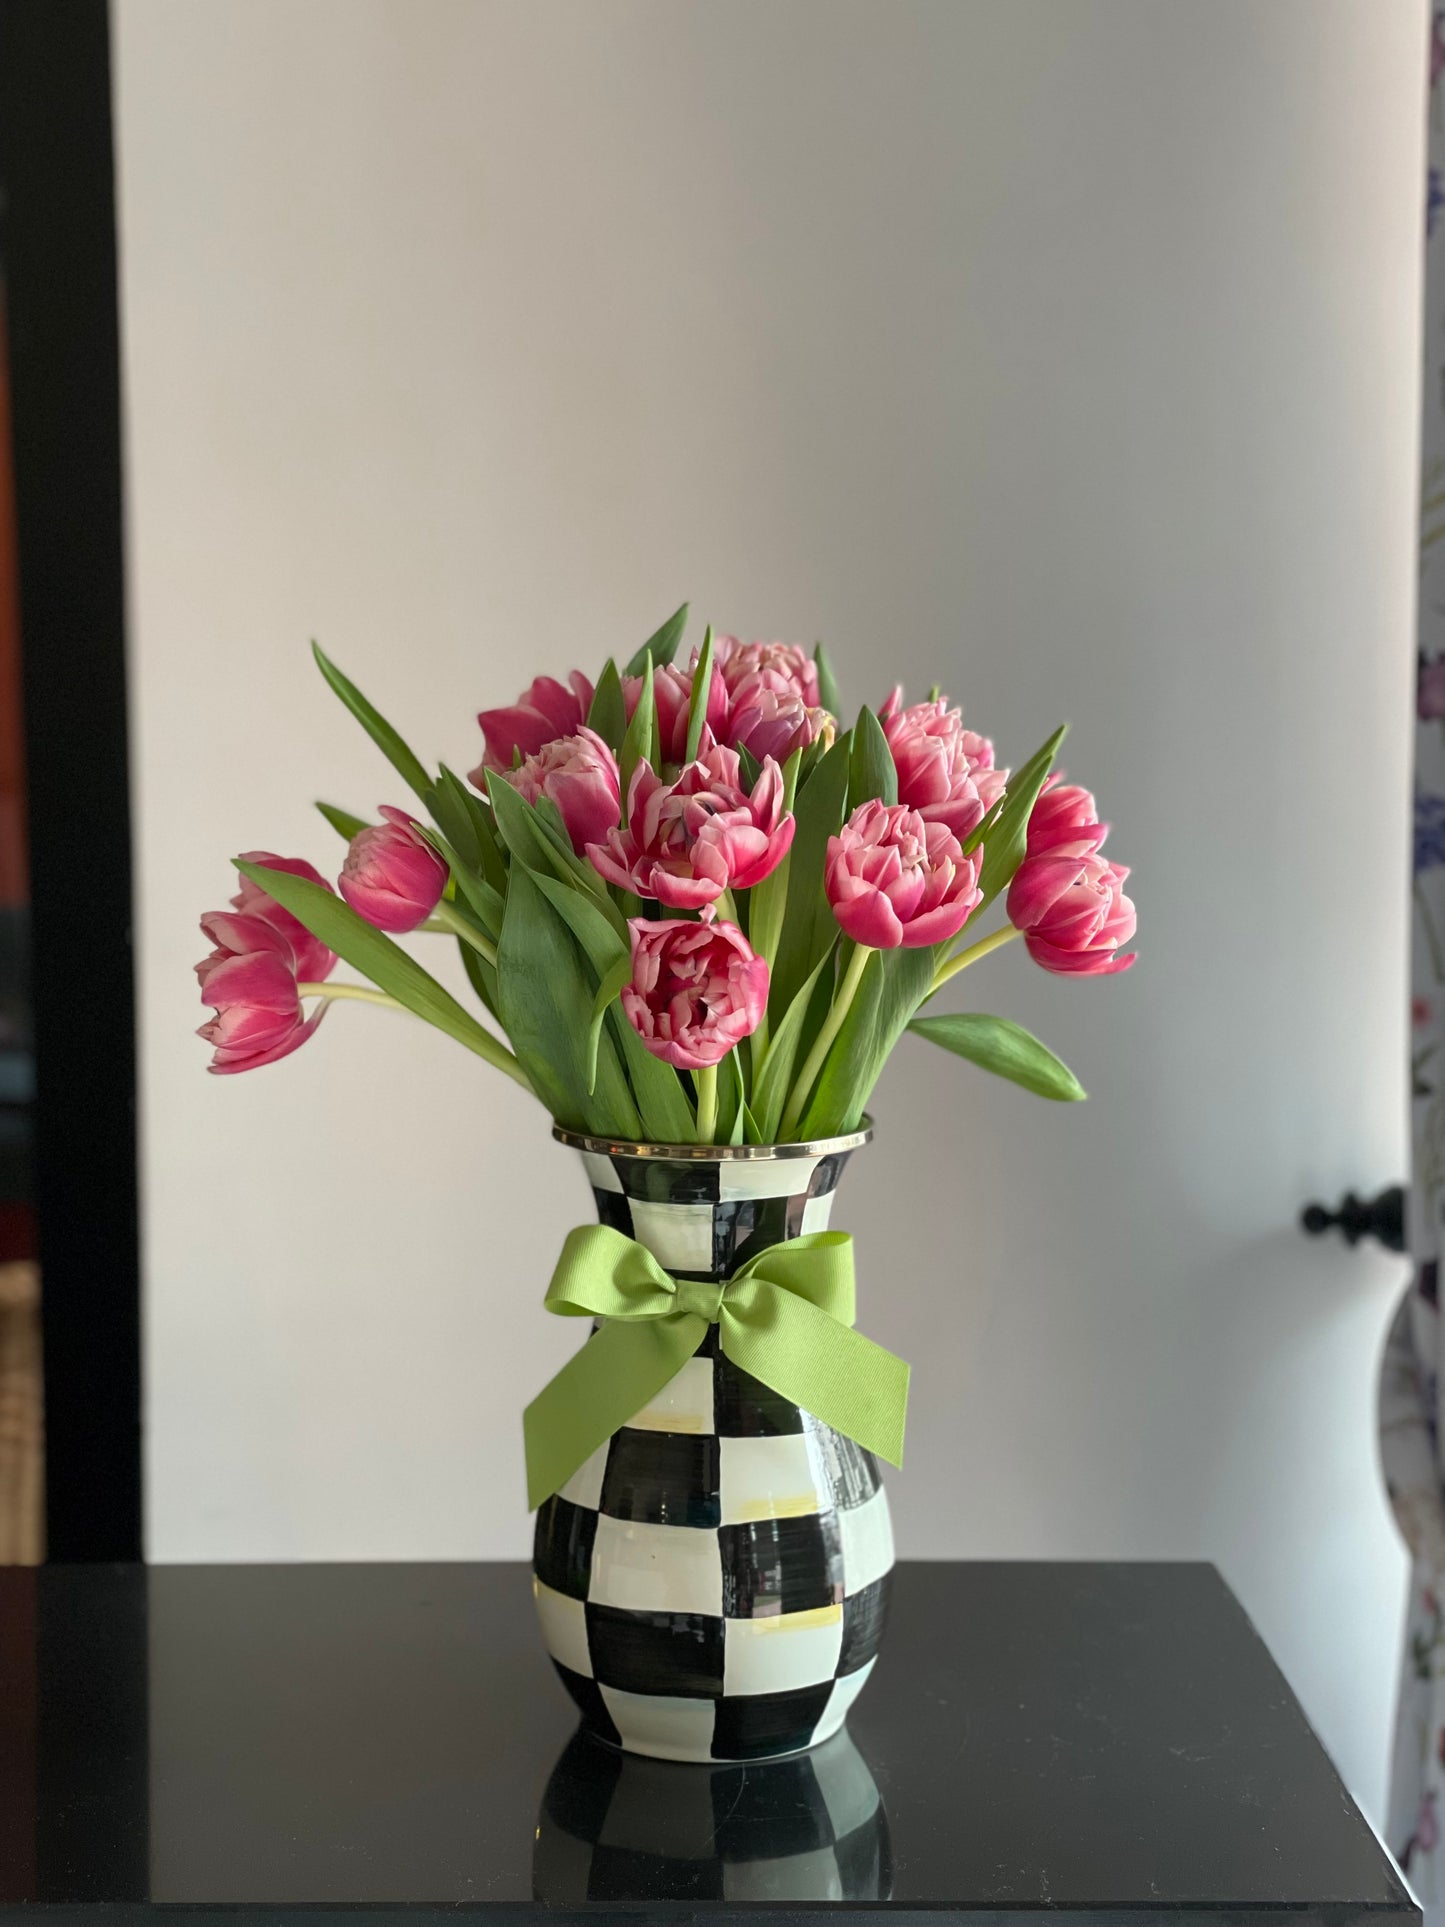 MacKenzie-Childs Courtly Check Enamel Vase and Tulips